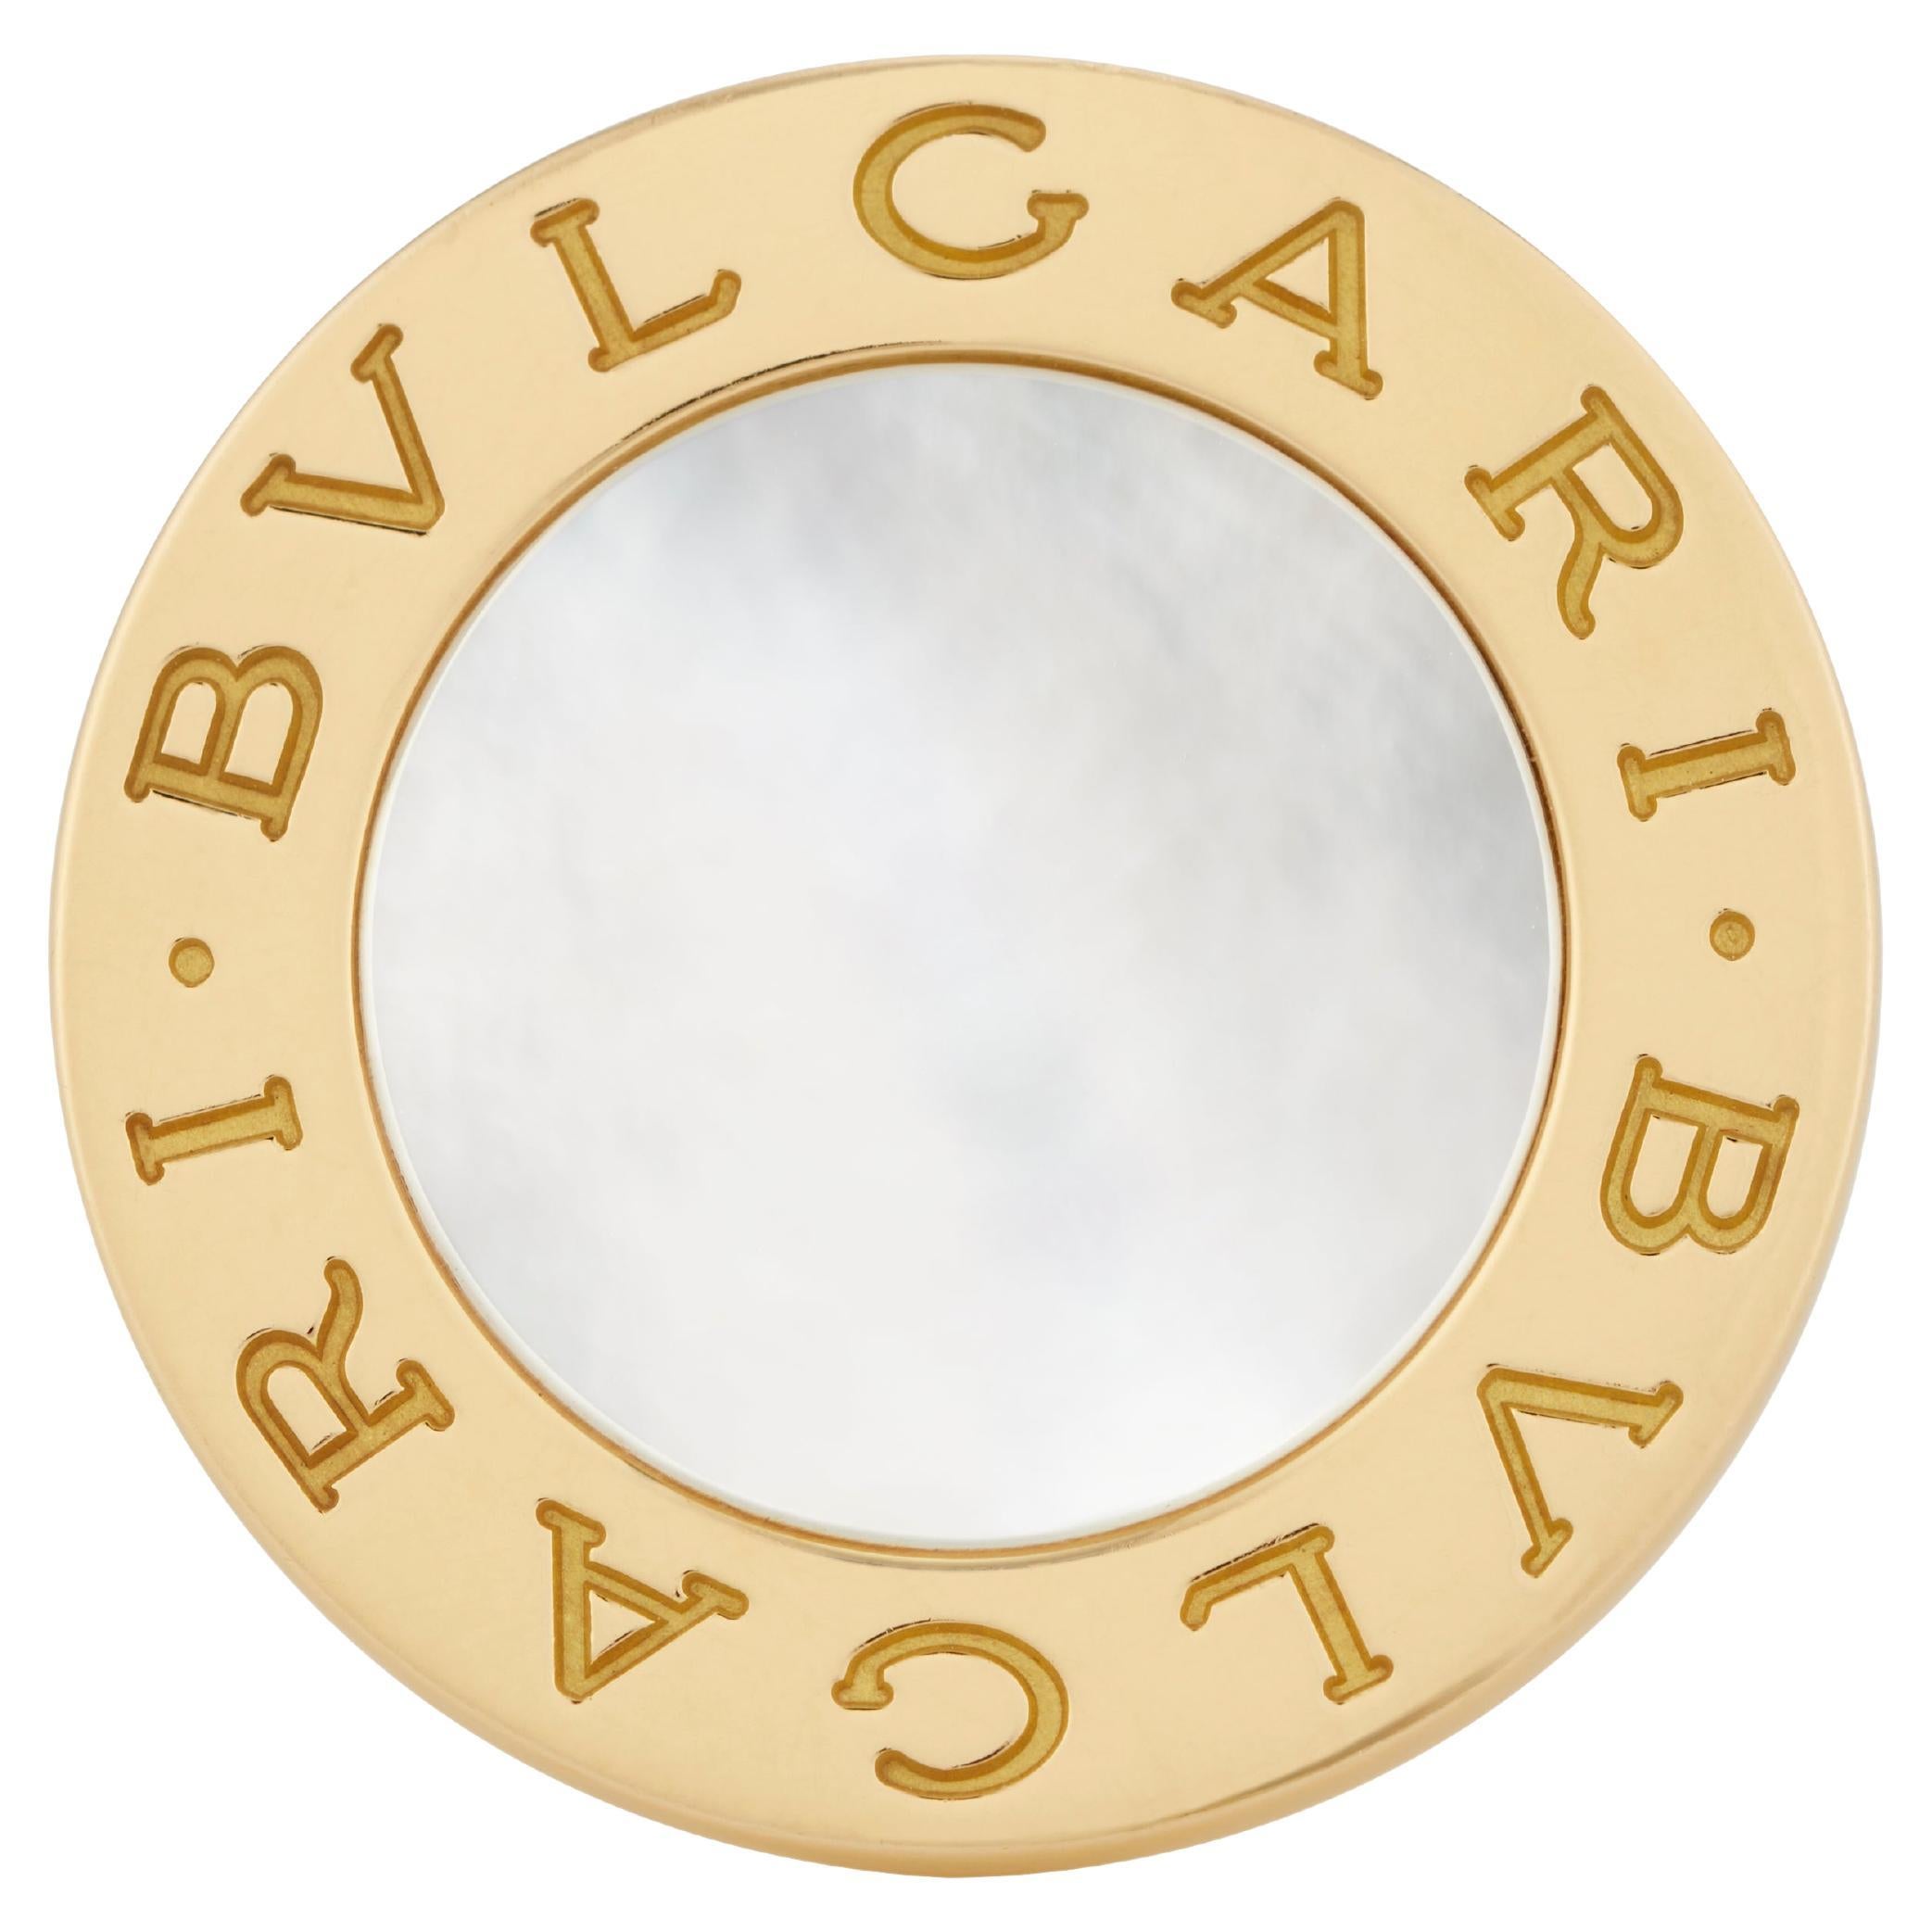 Bulgari 'Bvlgari Bvlgari' Mother of Pearl Large Version Ring in 18K Yellow Gold For Sale